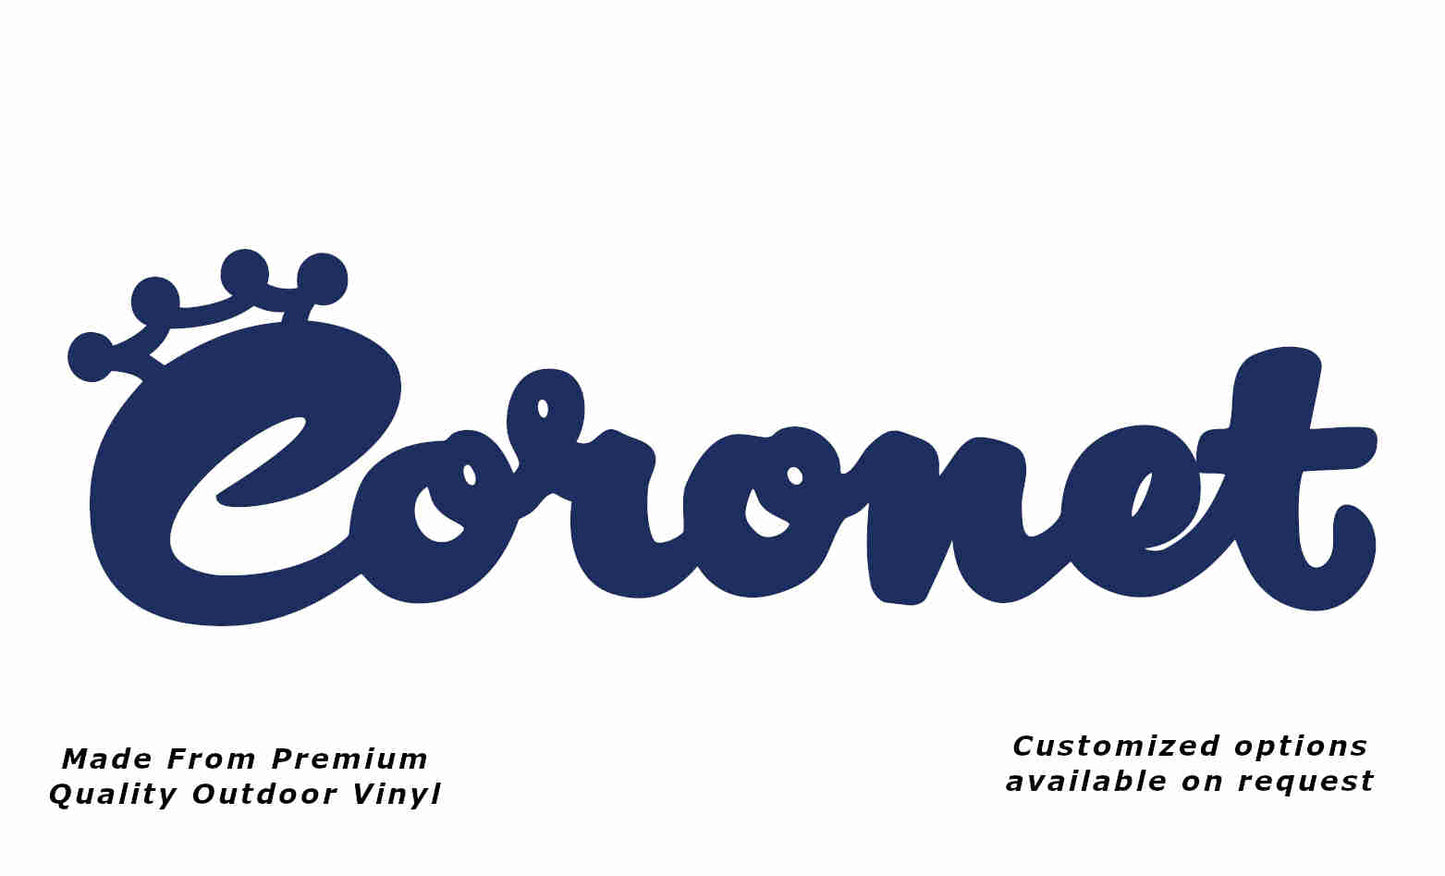 Coronet plain caravan replacement vinyl decal sticker in dark blue.